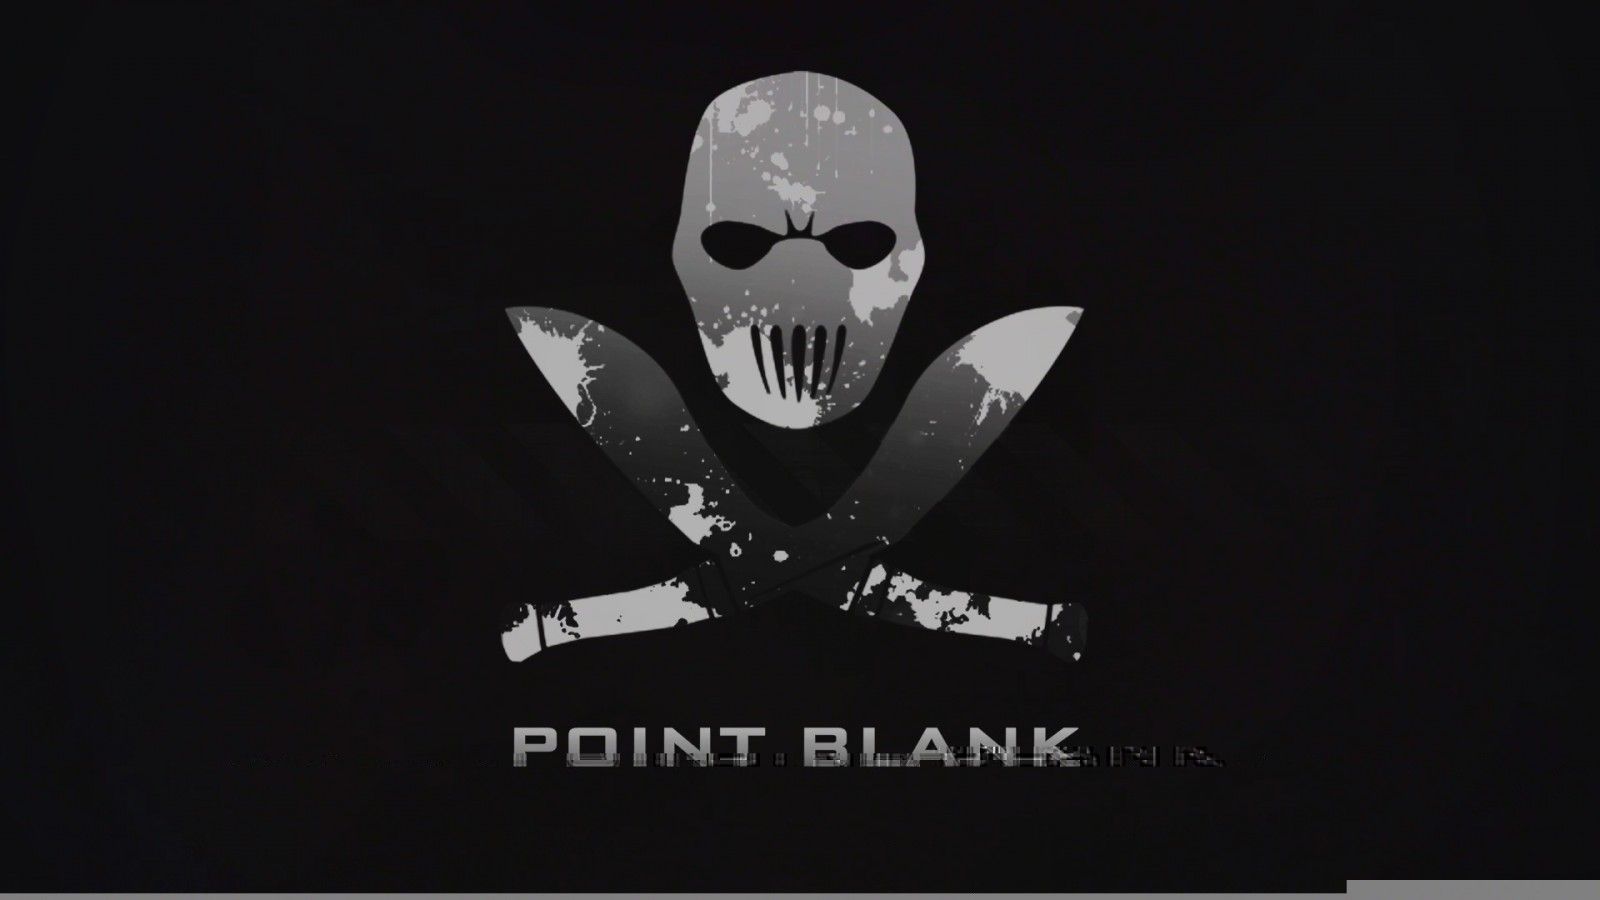 Download wallpaper point blank, minimalism, skull, game, black